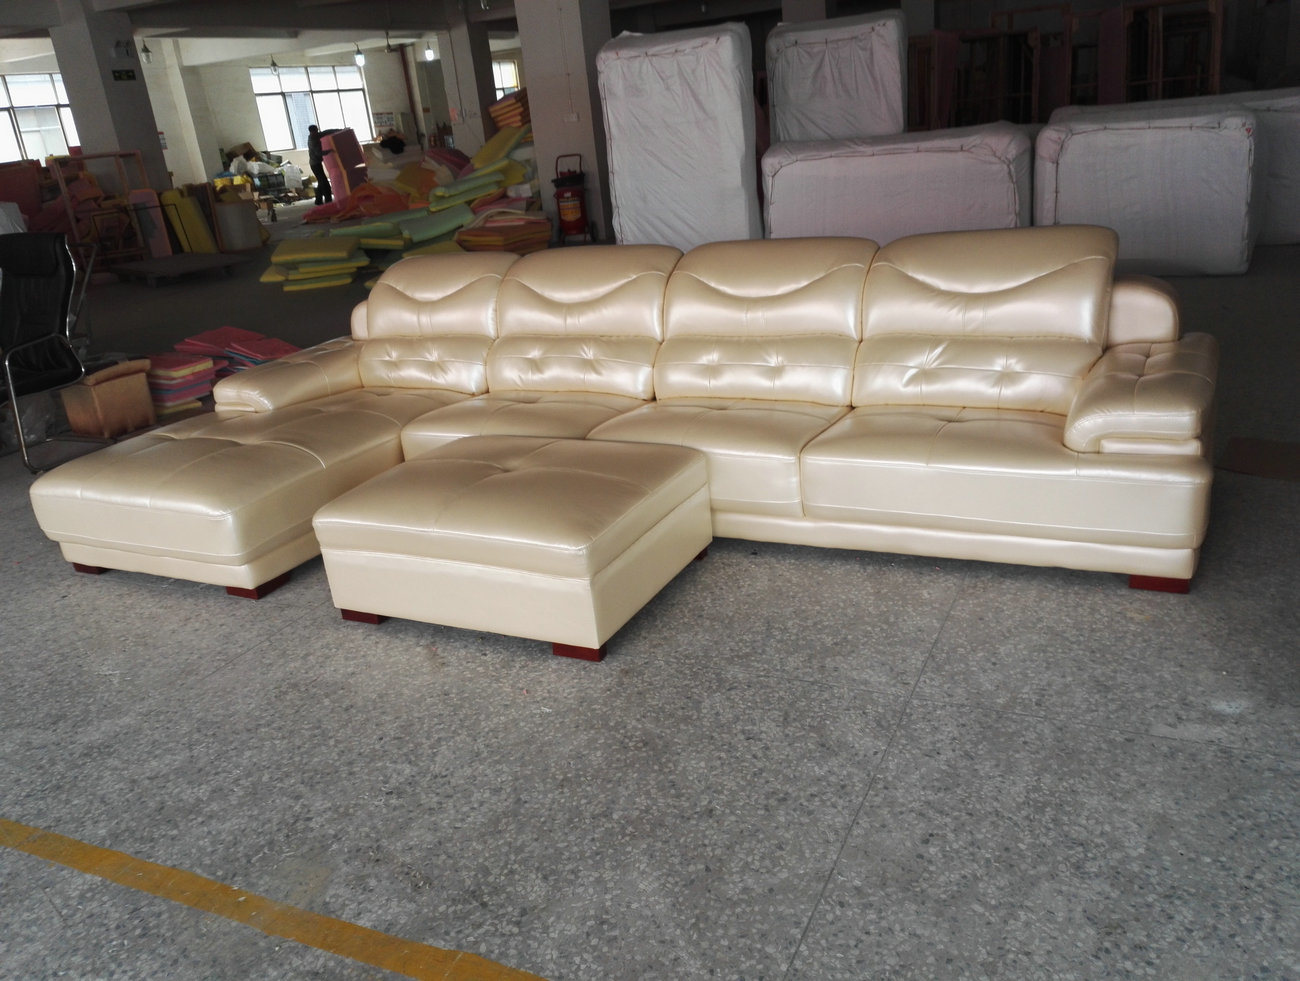 Europe Type Top Grain Genuine Leather Sofa (A816)